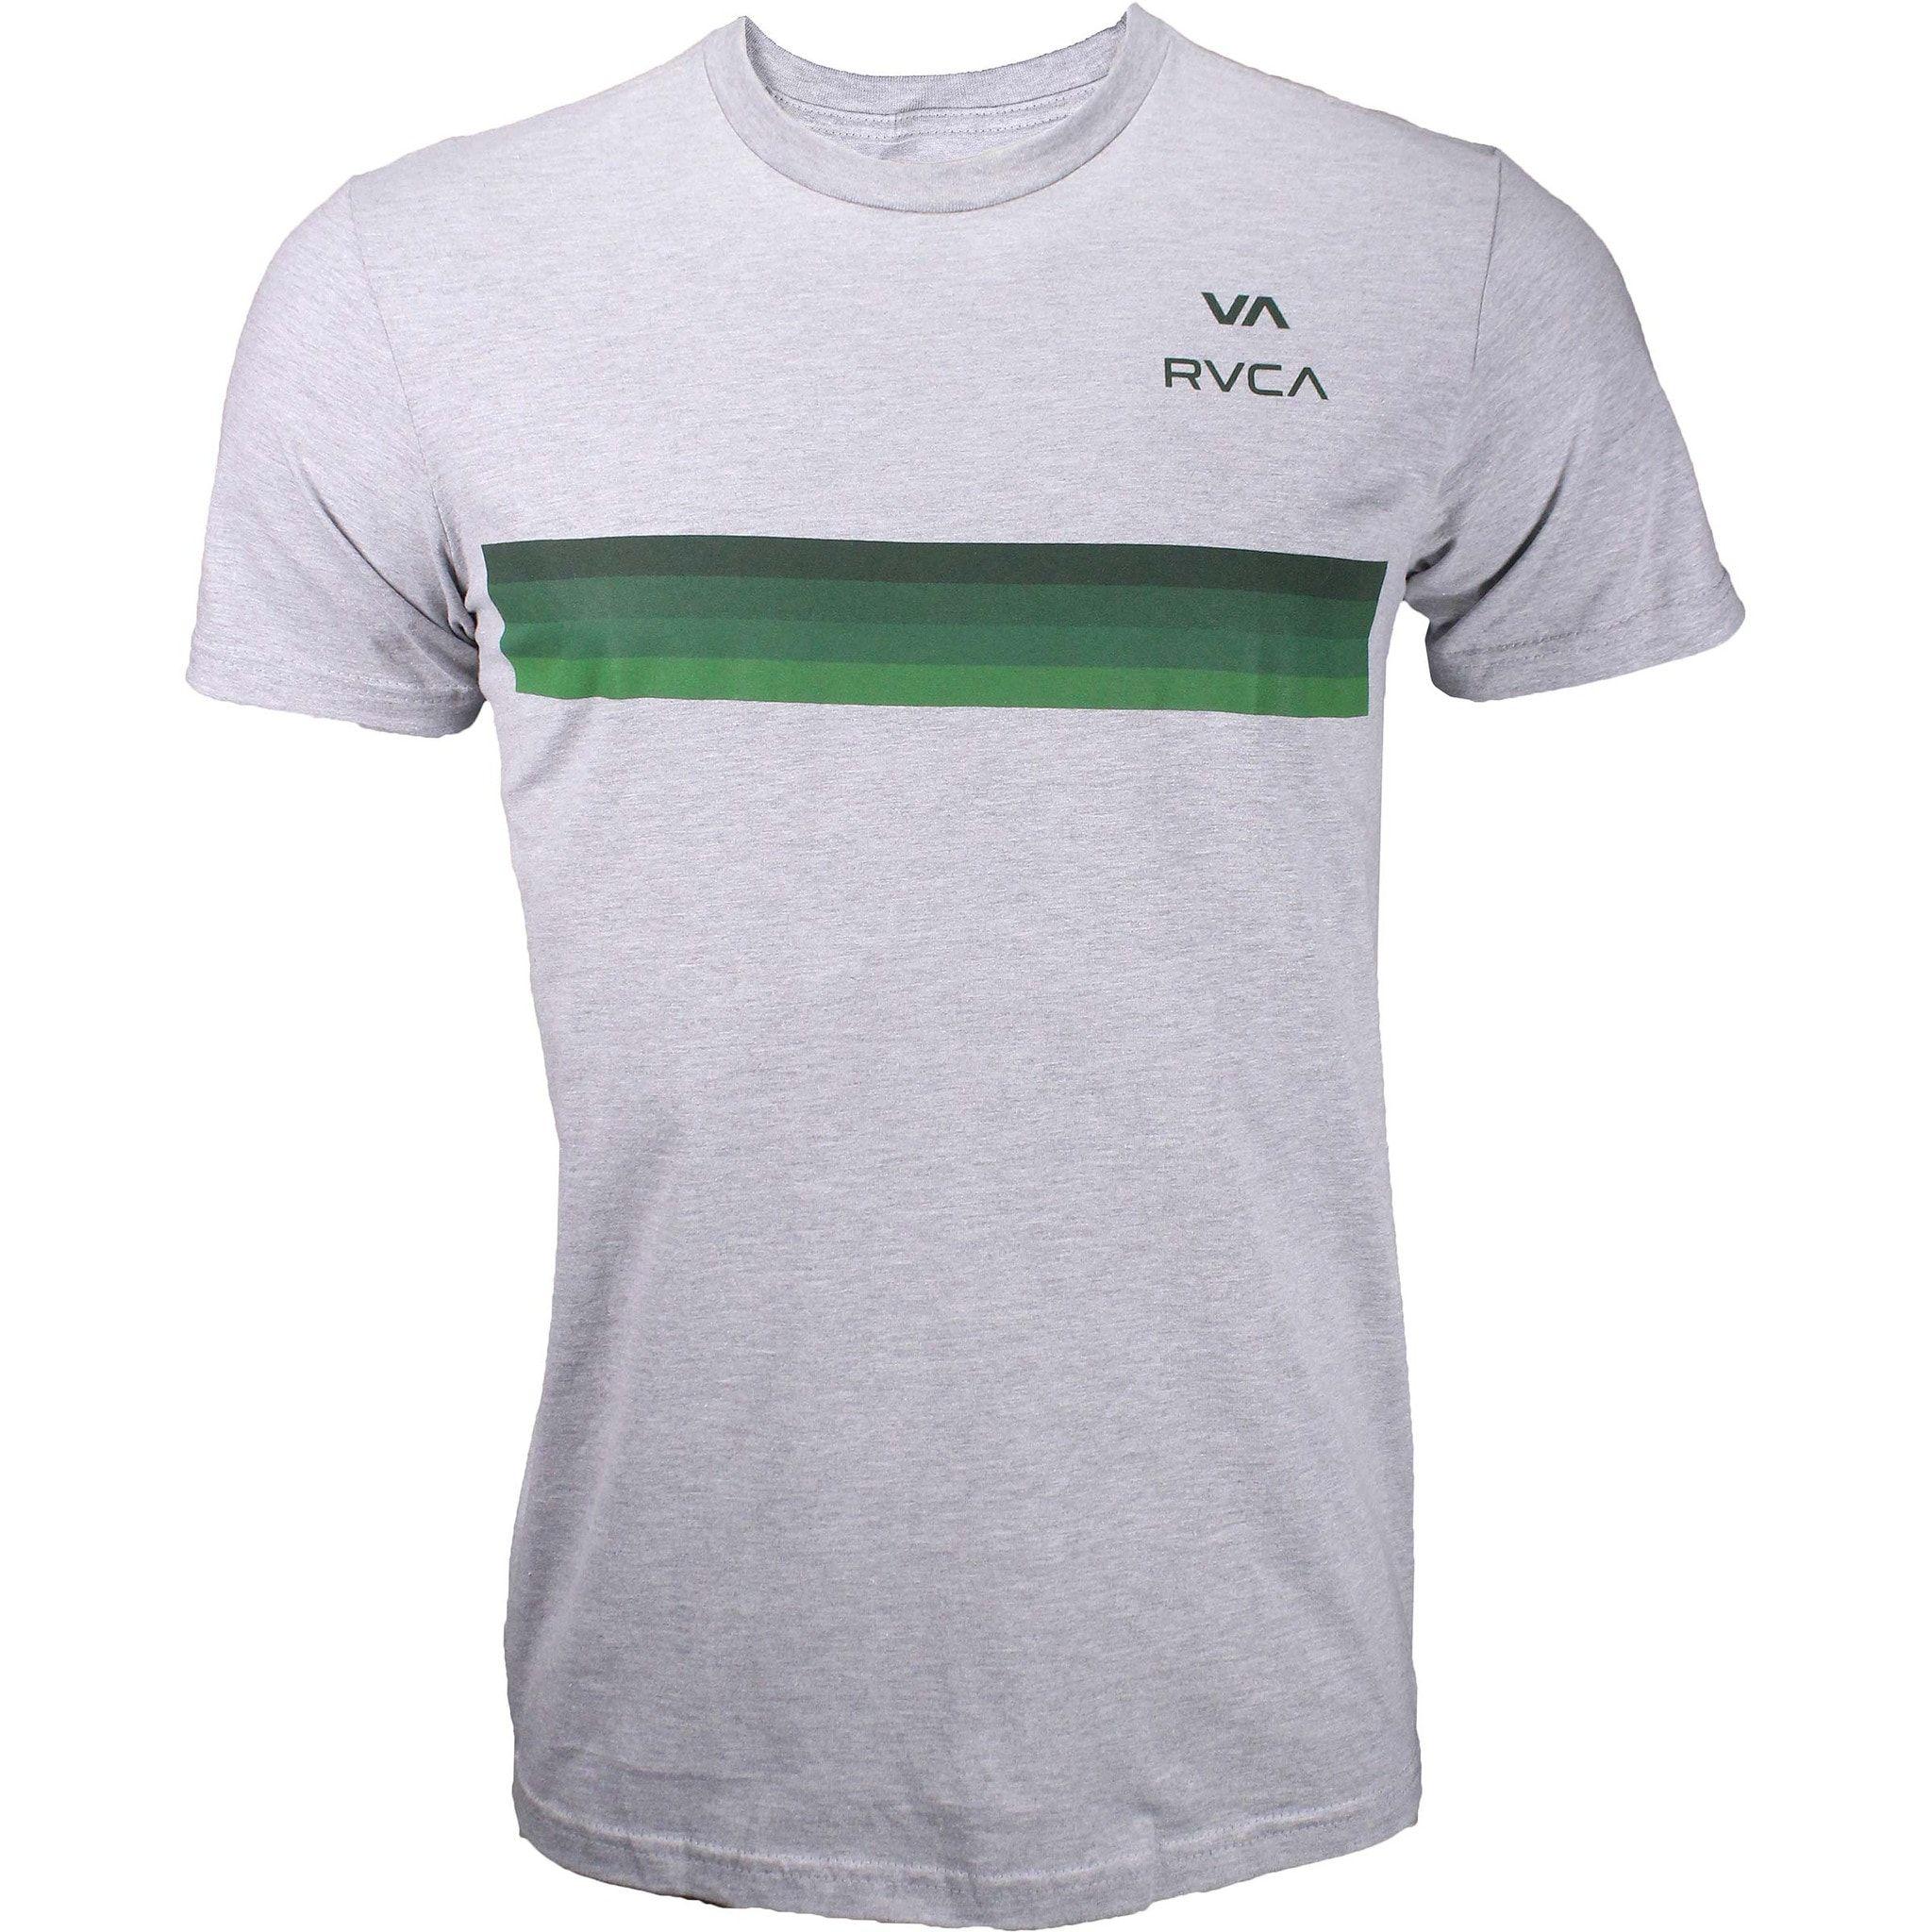 RVCA Clothing Logo - Listed Price: $25.99 Brand: RVCA RVCA VA Horizon Shirt Short sleeve ...